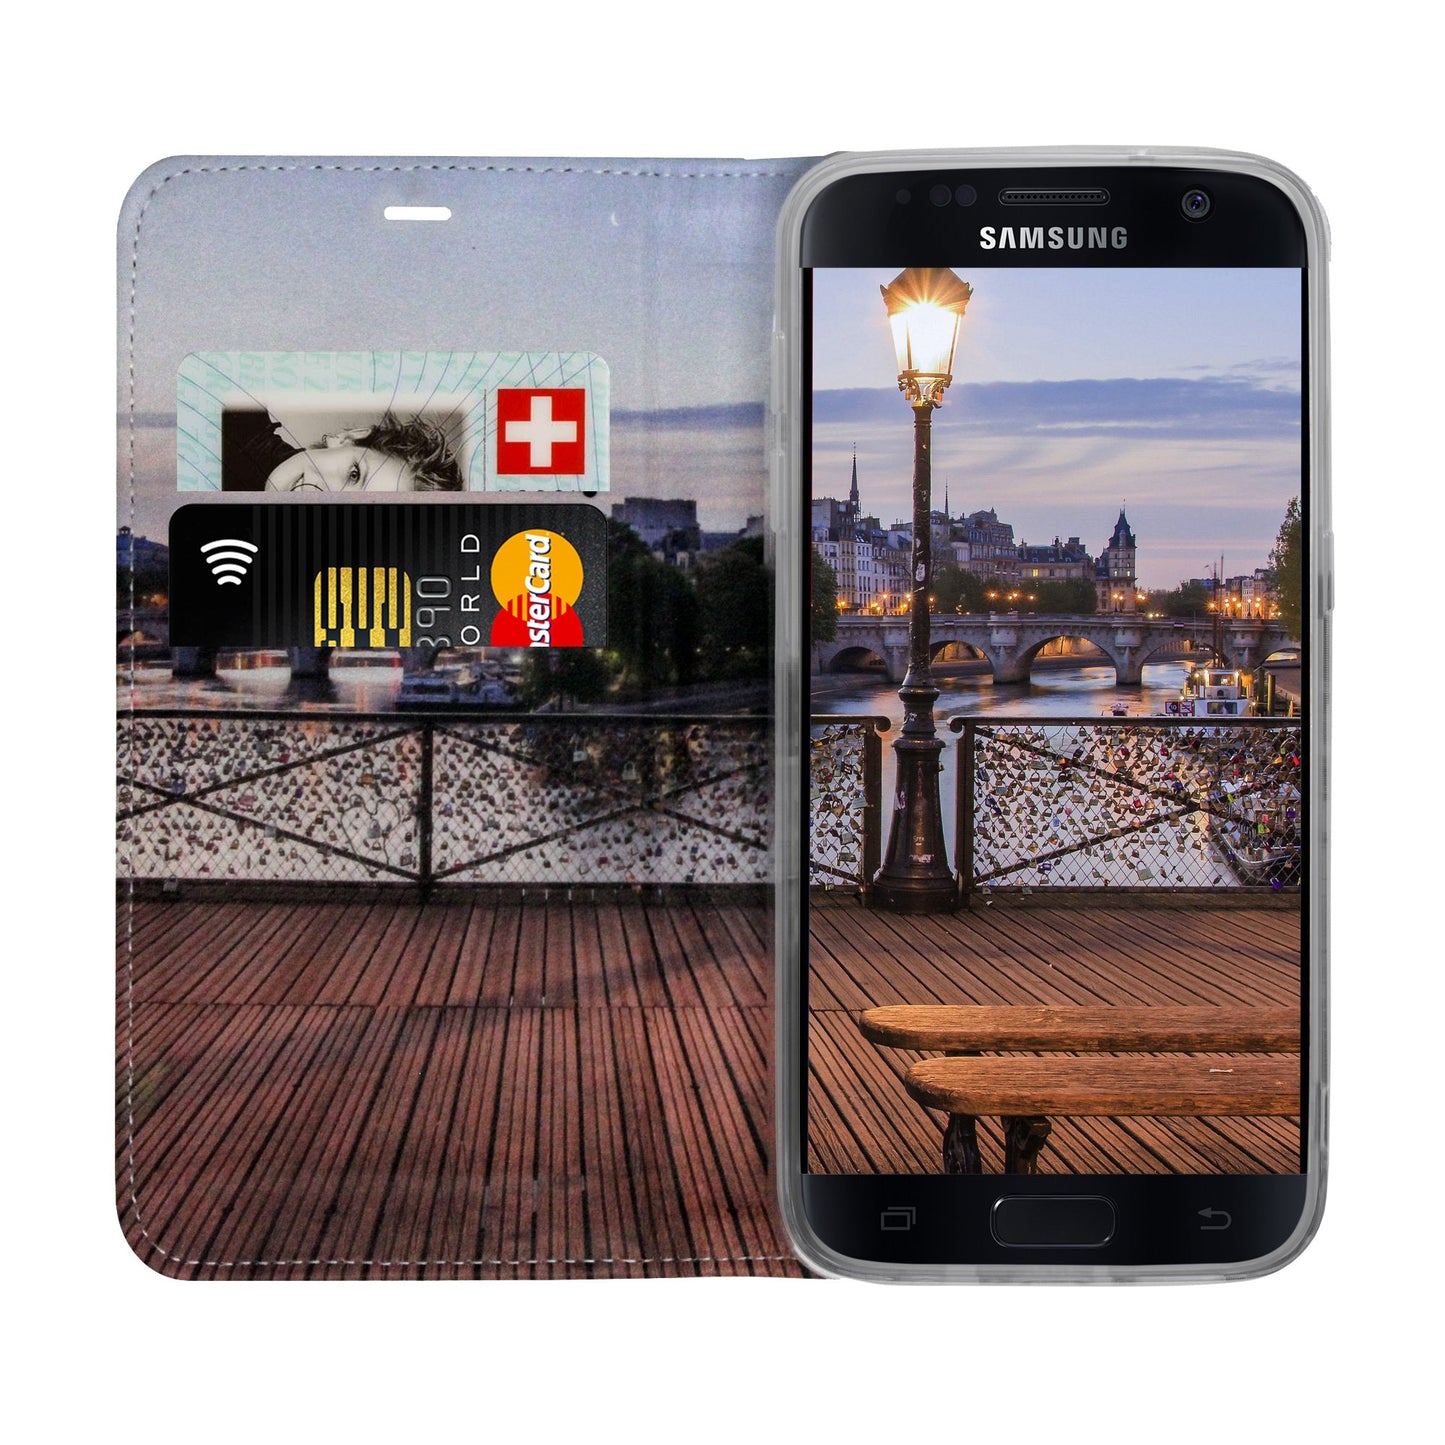 Paris City Panorama Case for Samsung Galaxy S7